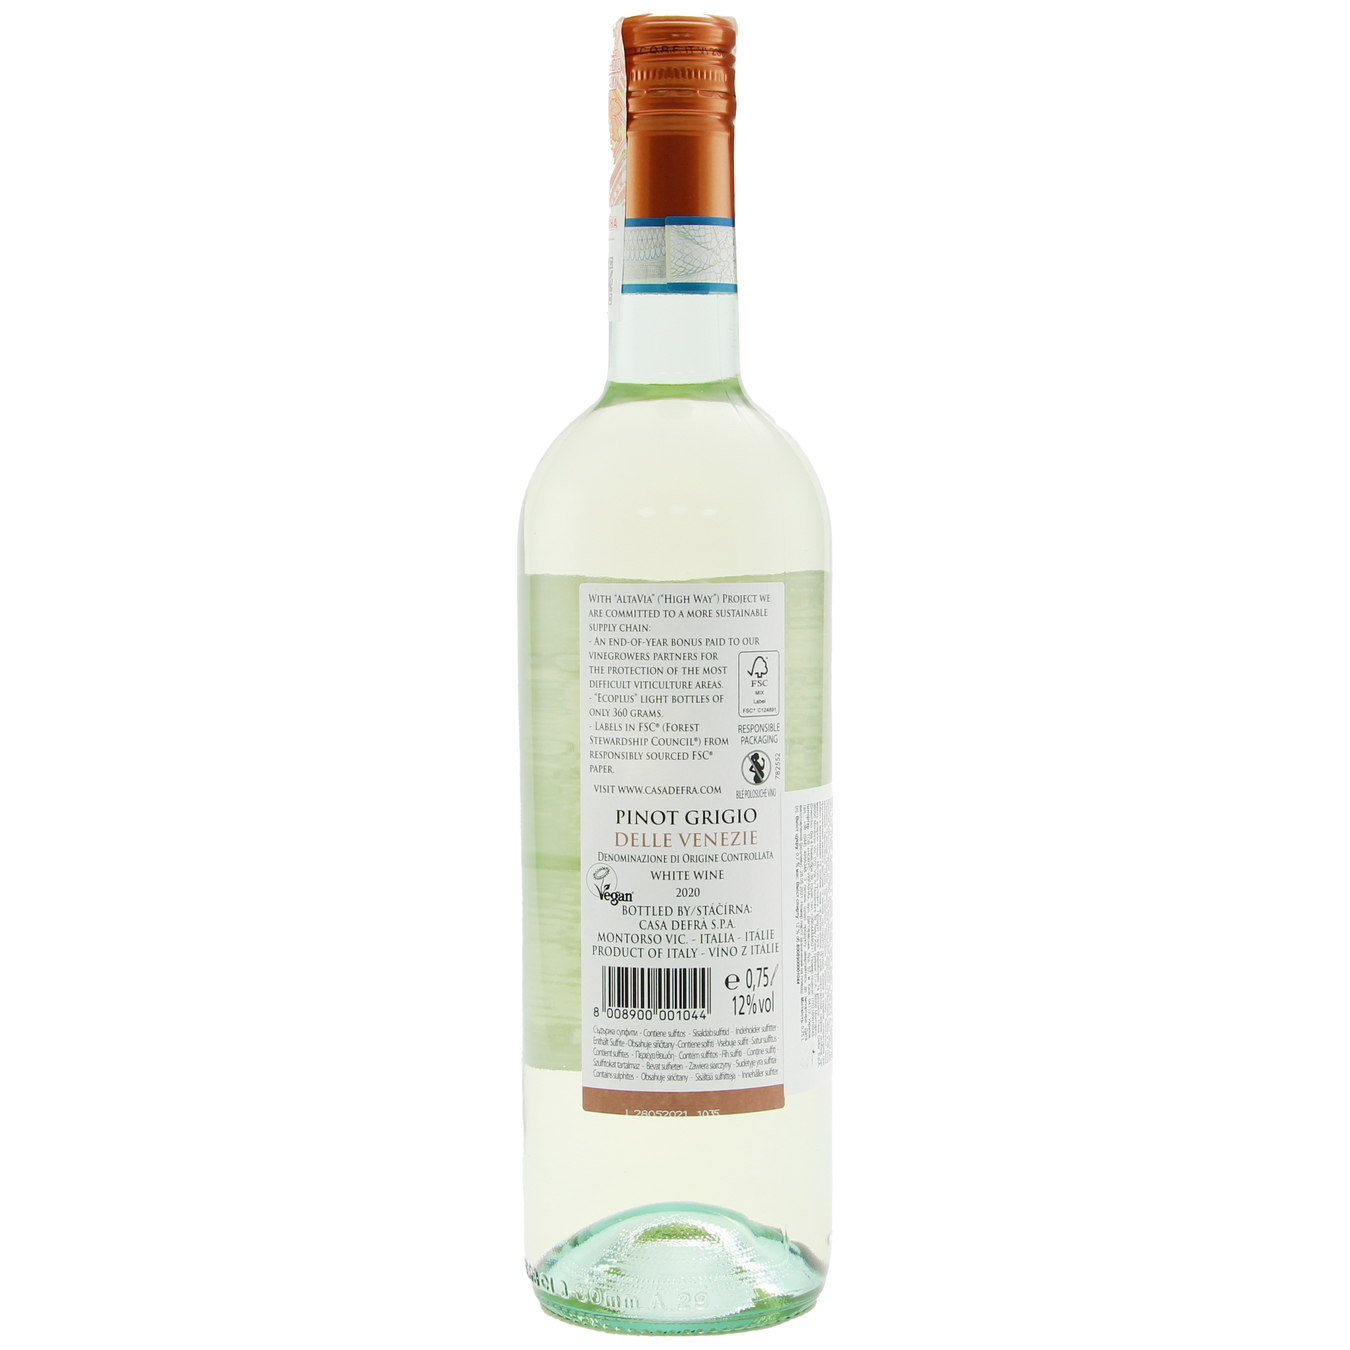 Casa Defra Pinot Grigio Delle Venezie IGT white semi-sweet wine 12.5% 0.75l 2